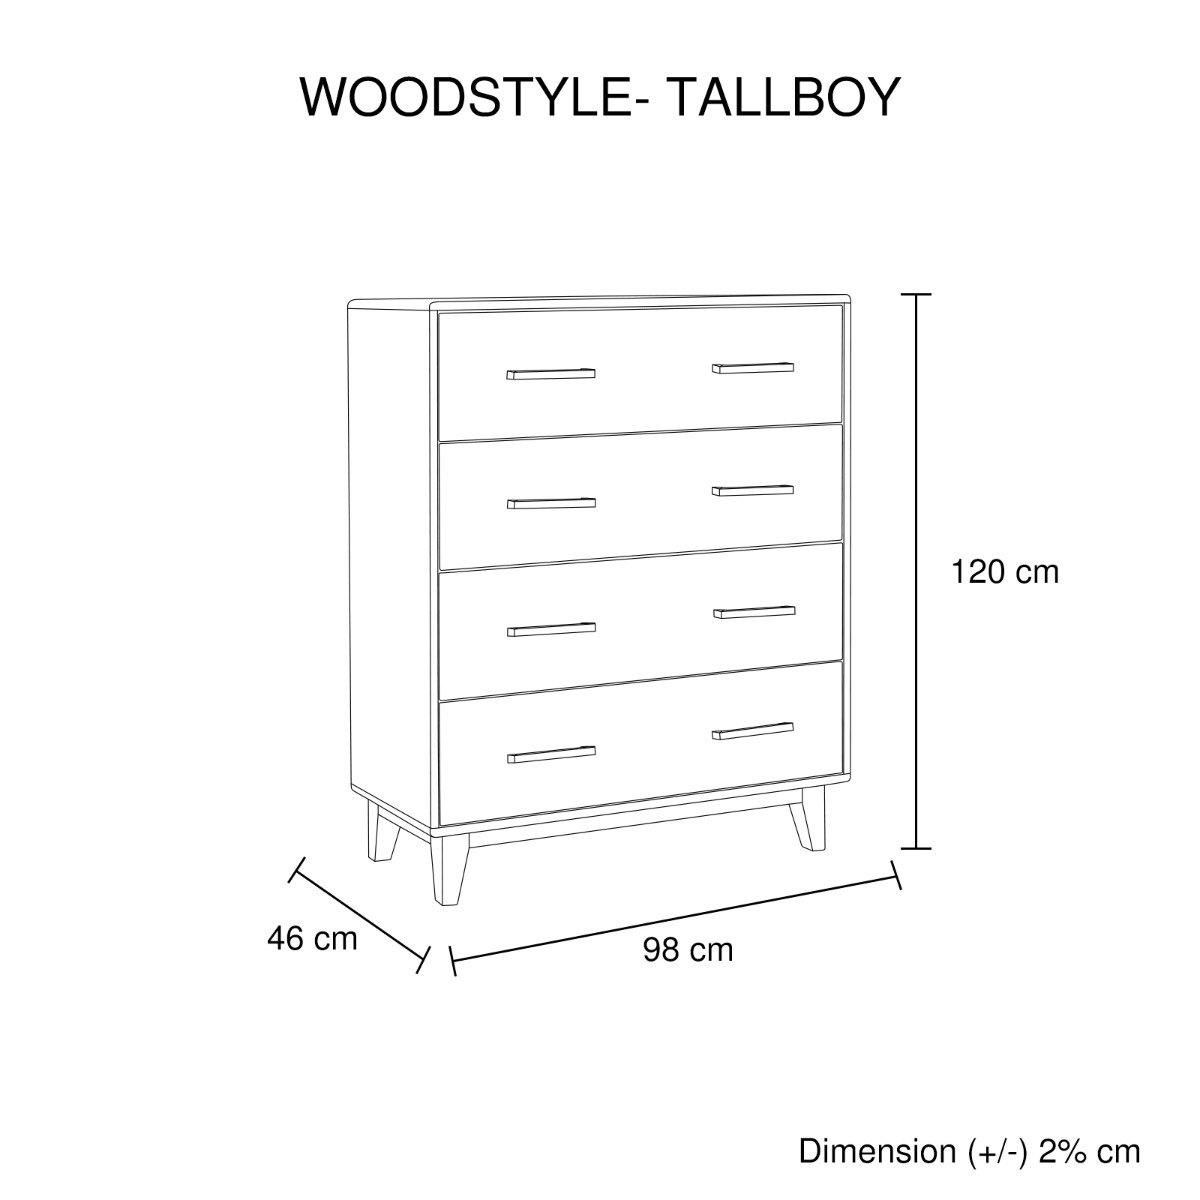 Woodstyle 4- drawer Tallboy - Evopia